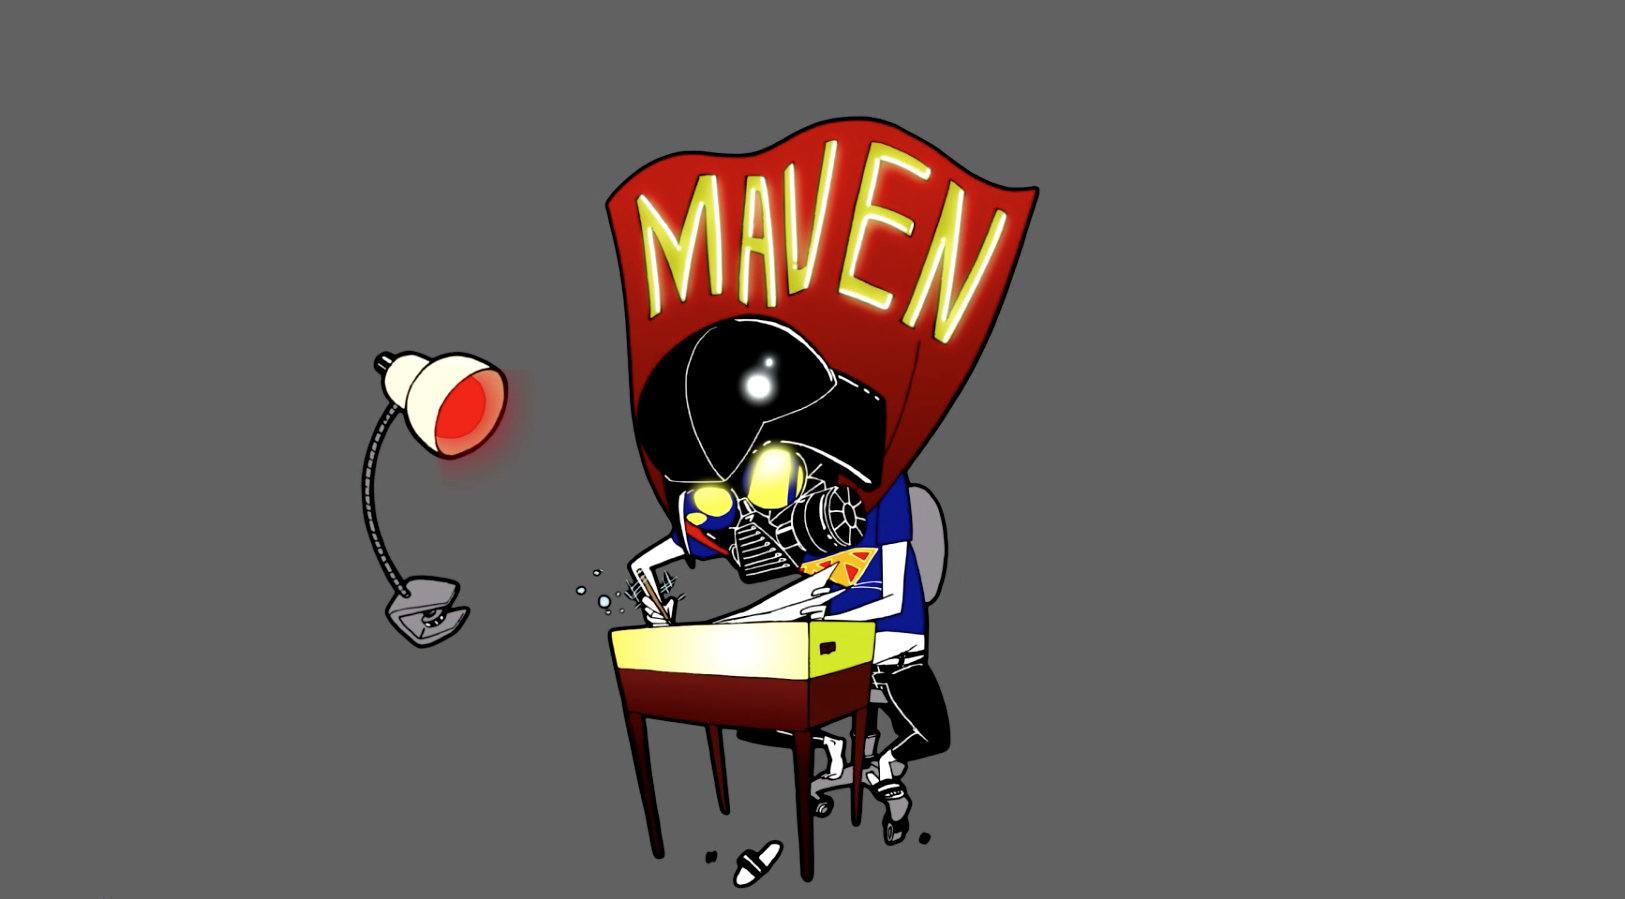 Maven Animation Studio